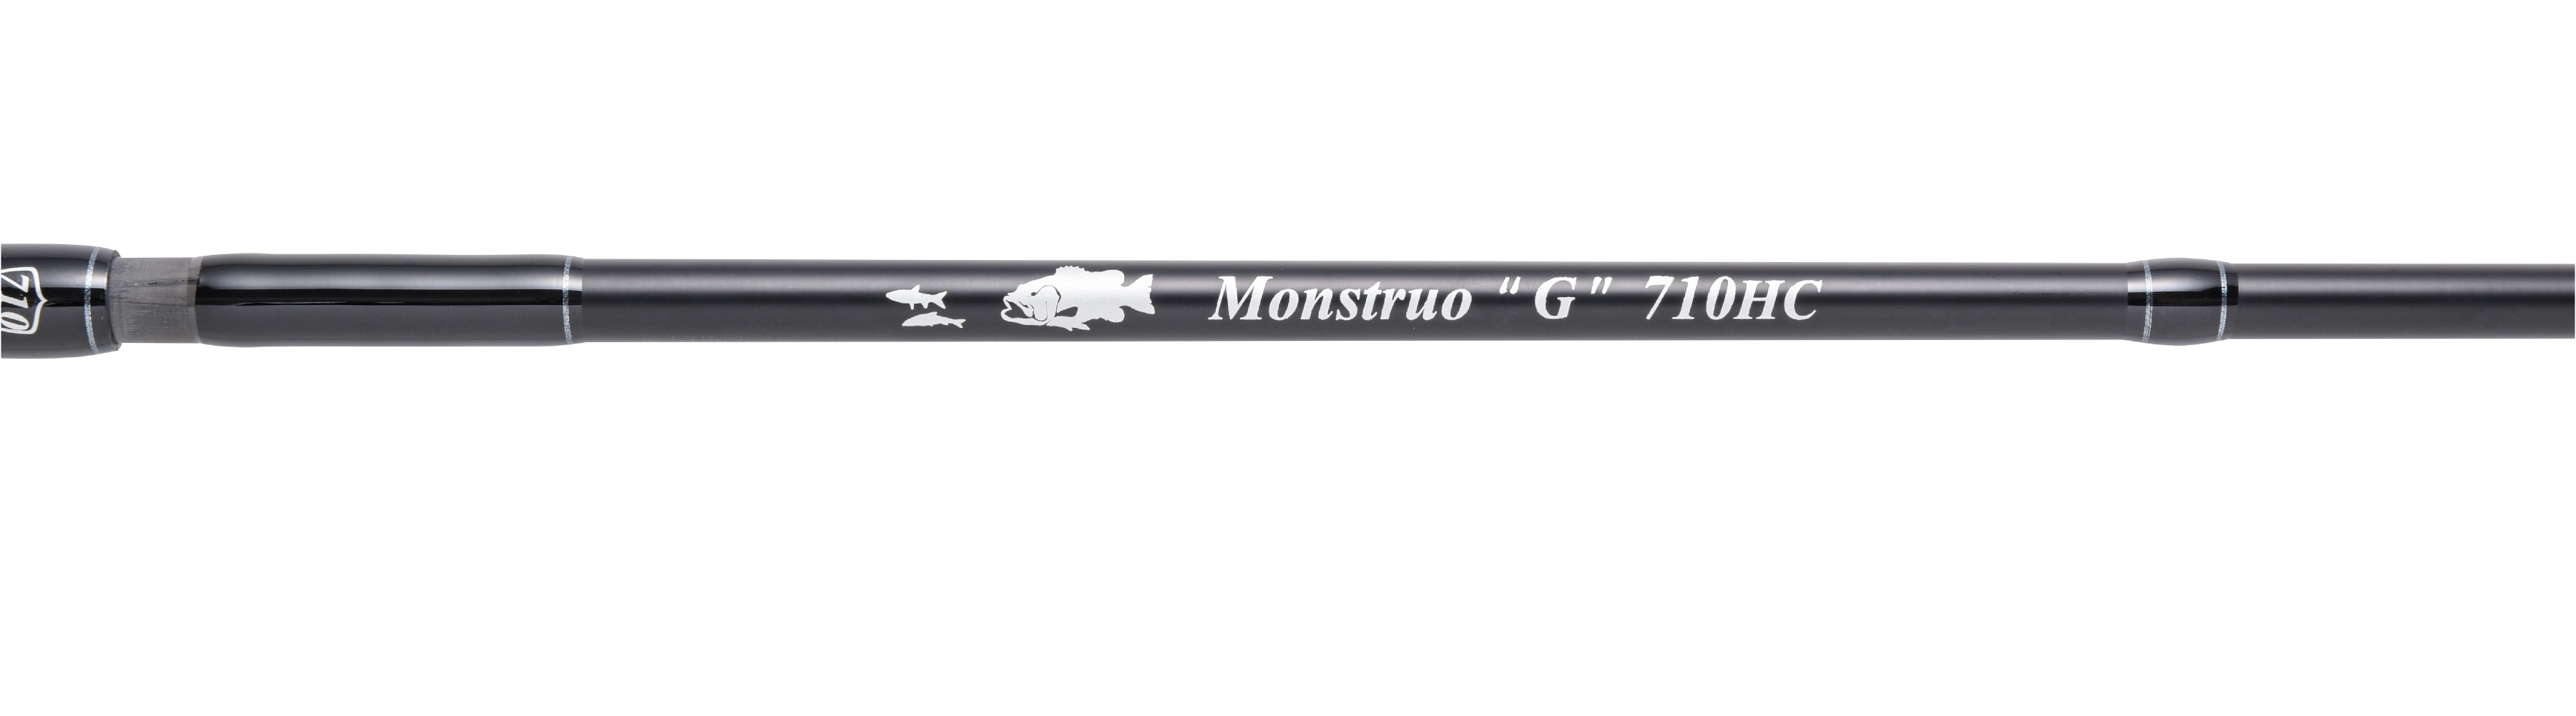 TULALA | Ford every stream | » Monstruo”G” 710HC